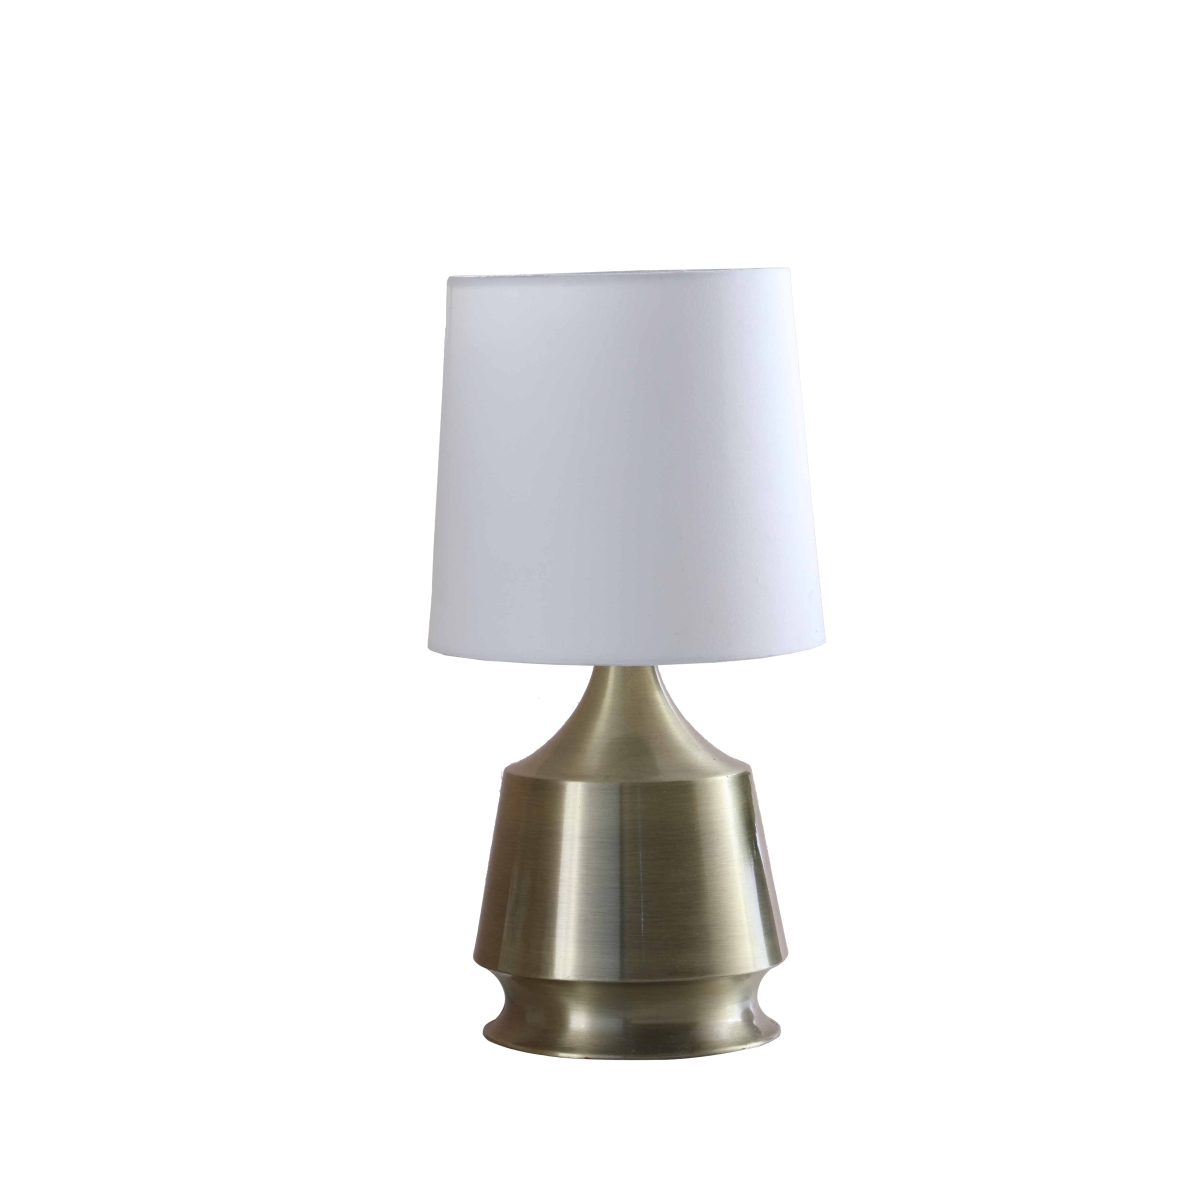 Hbl2110 14 In. Ellis Metal Table Lamp - Antique Brass & White